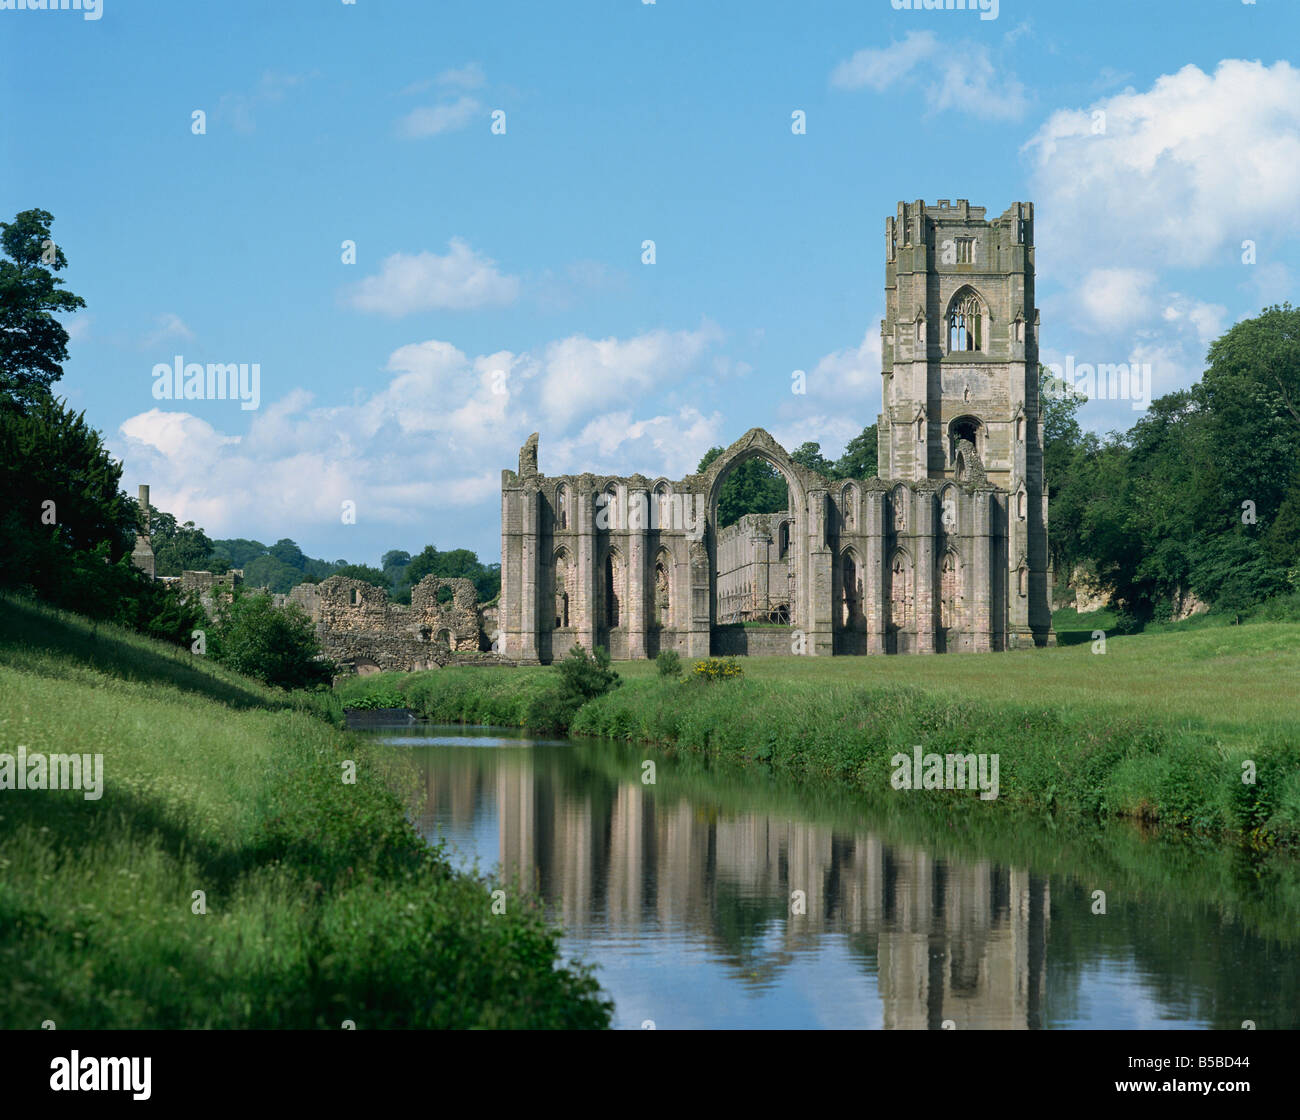 Fountains Abbey Sitio de Patrimonio Mundial de la UNESCO Yorkshire, Inglaterra, Reino Unido Europa Foto de stock